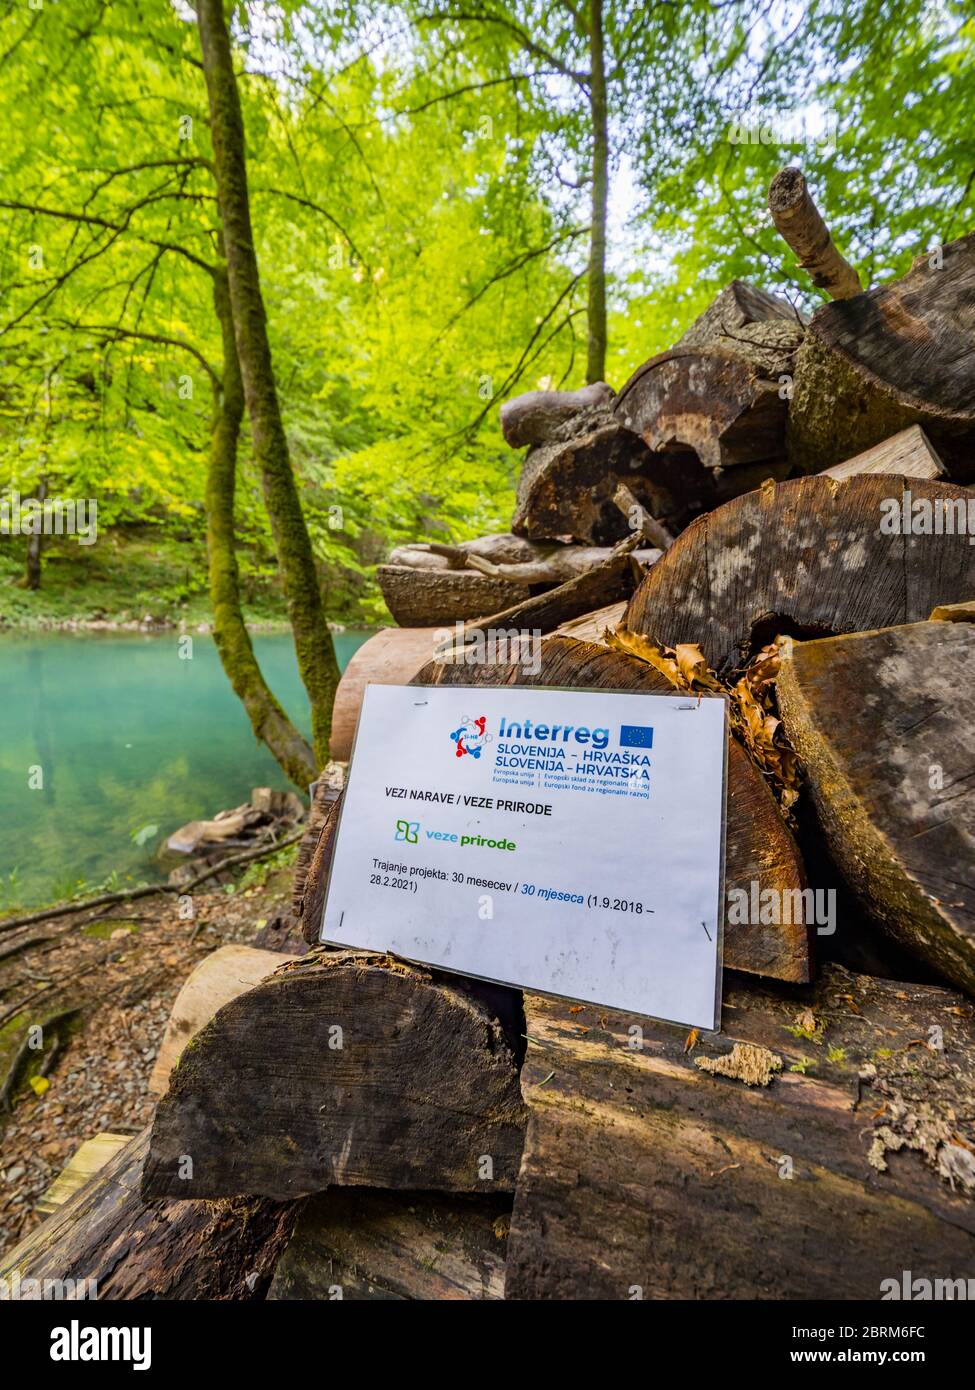 Interreg EU European thematic programme on natural source of river Kupa in Croatia Europe Stock Photo